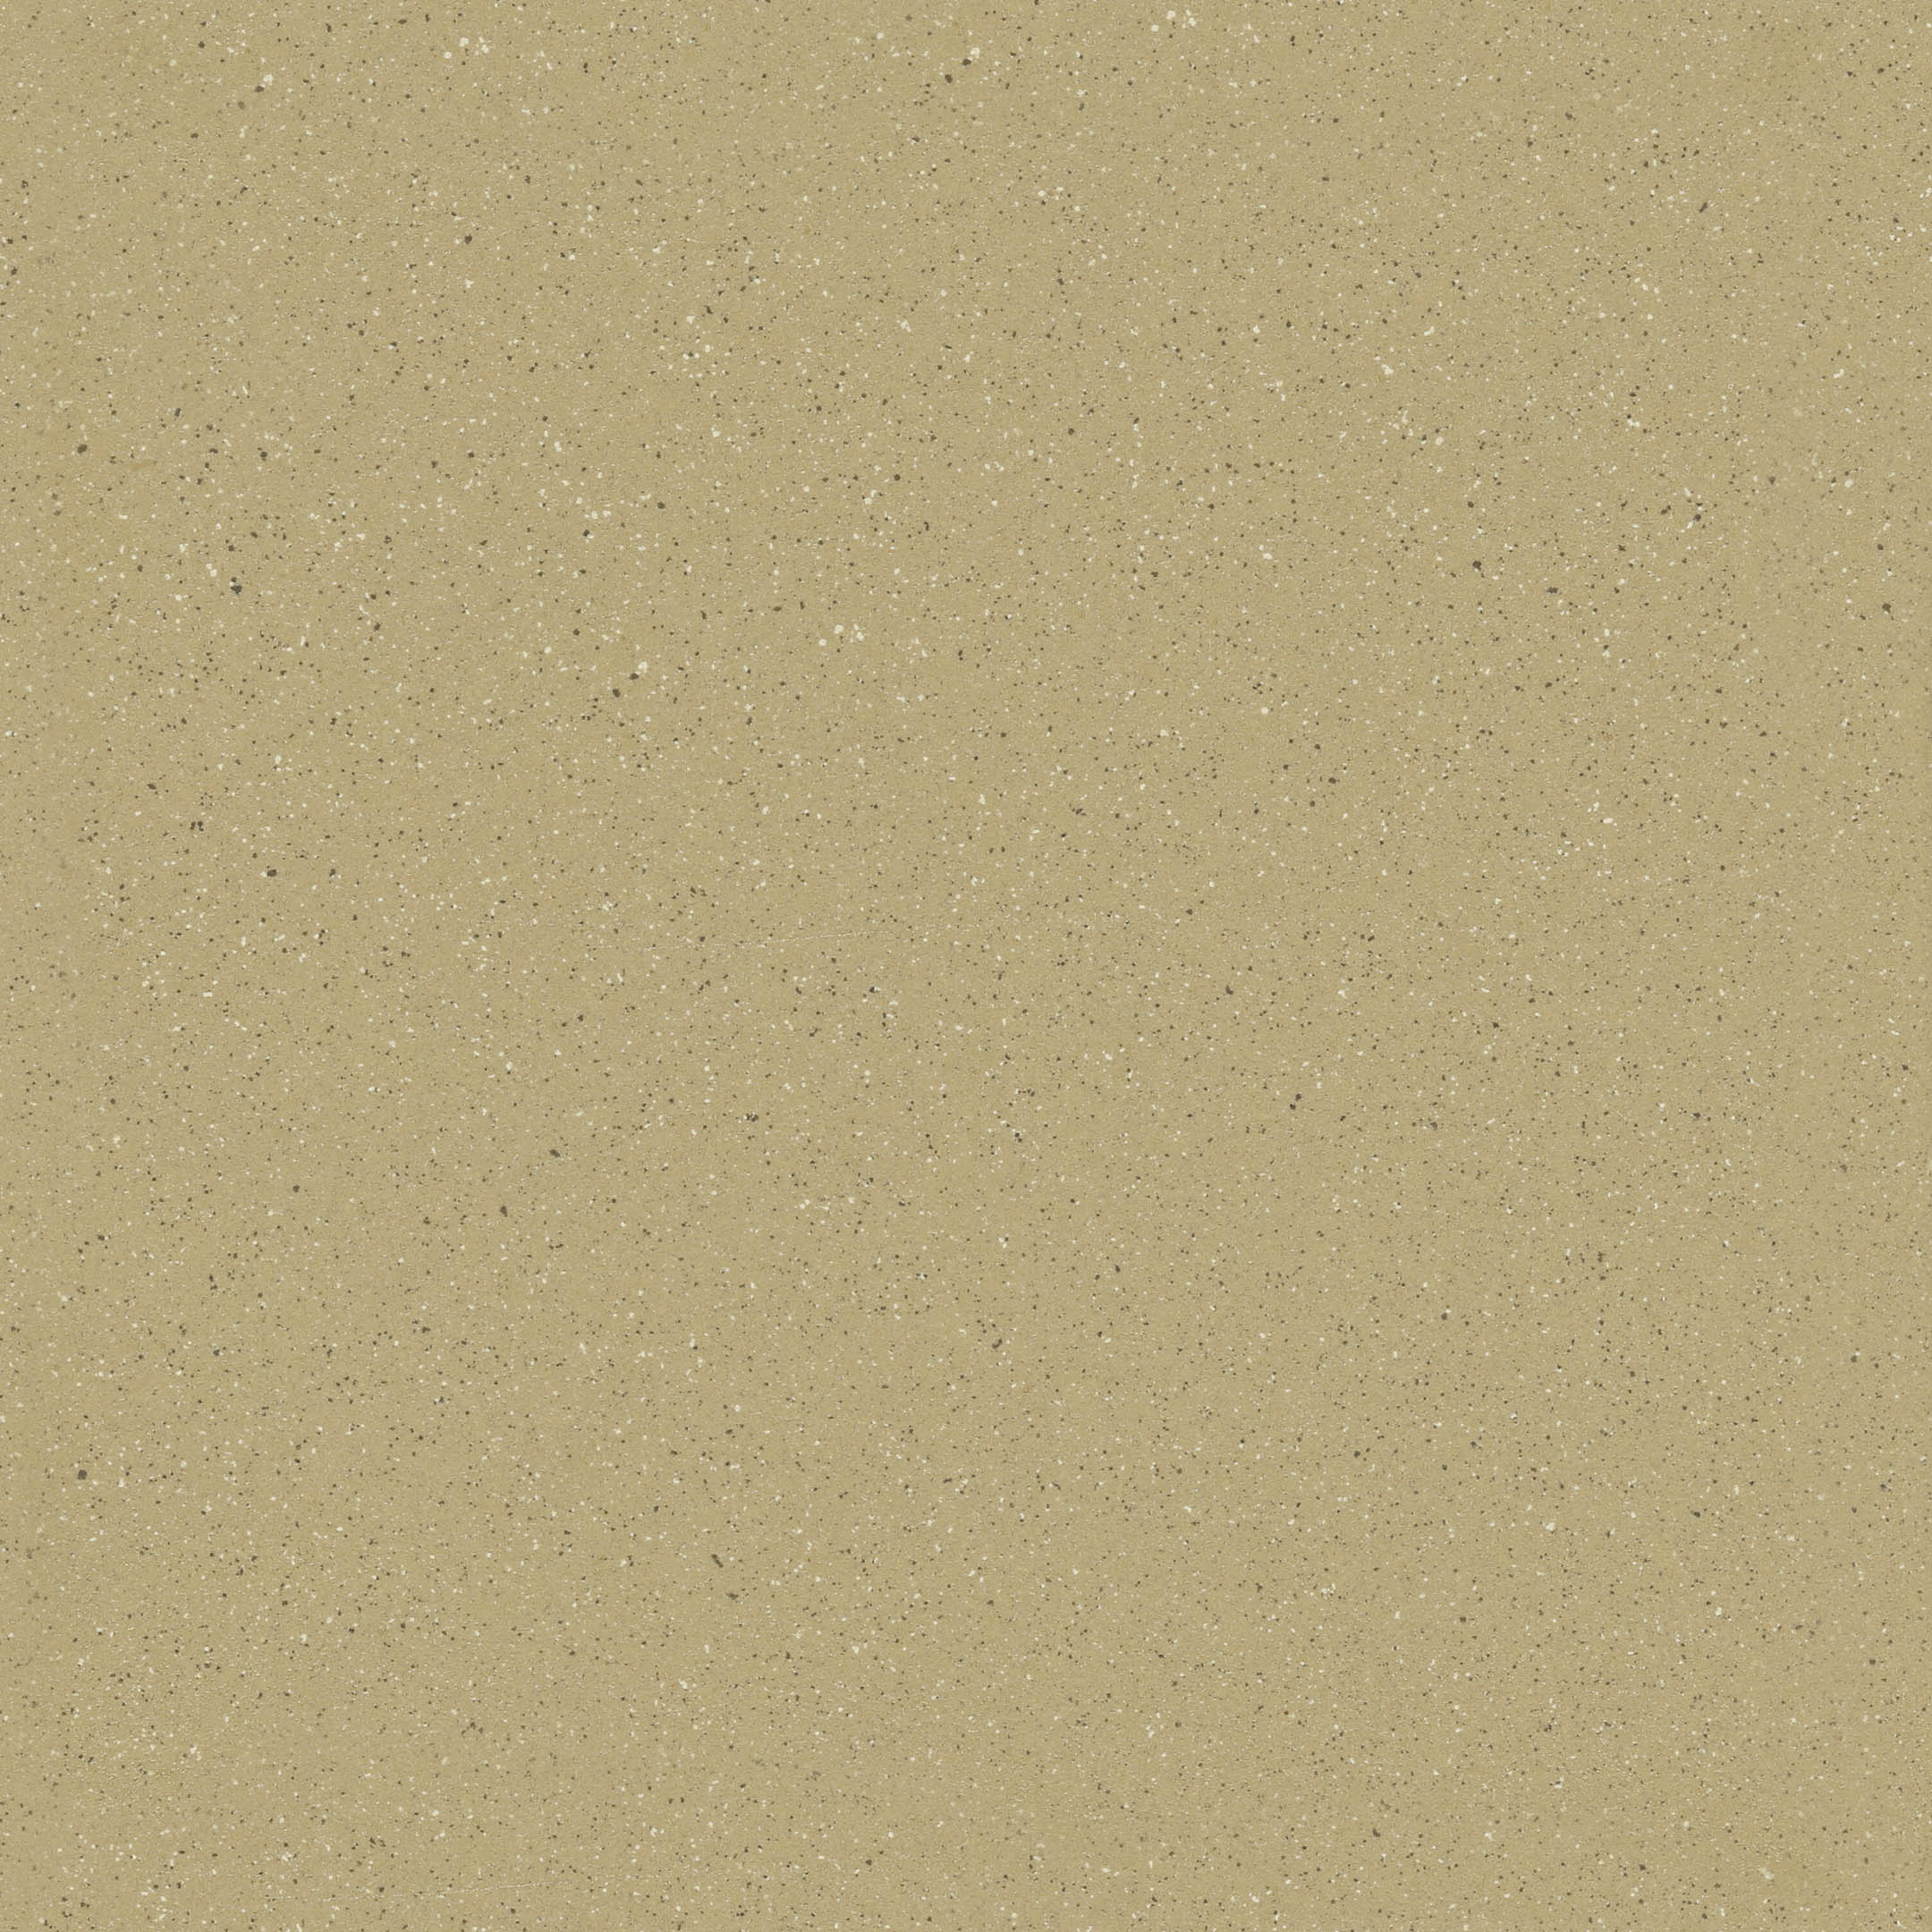 фото Керамогранит керамин грес 0641 серо-коричневый 300х300х8 мм (15 шт.=1,35 кв.м)